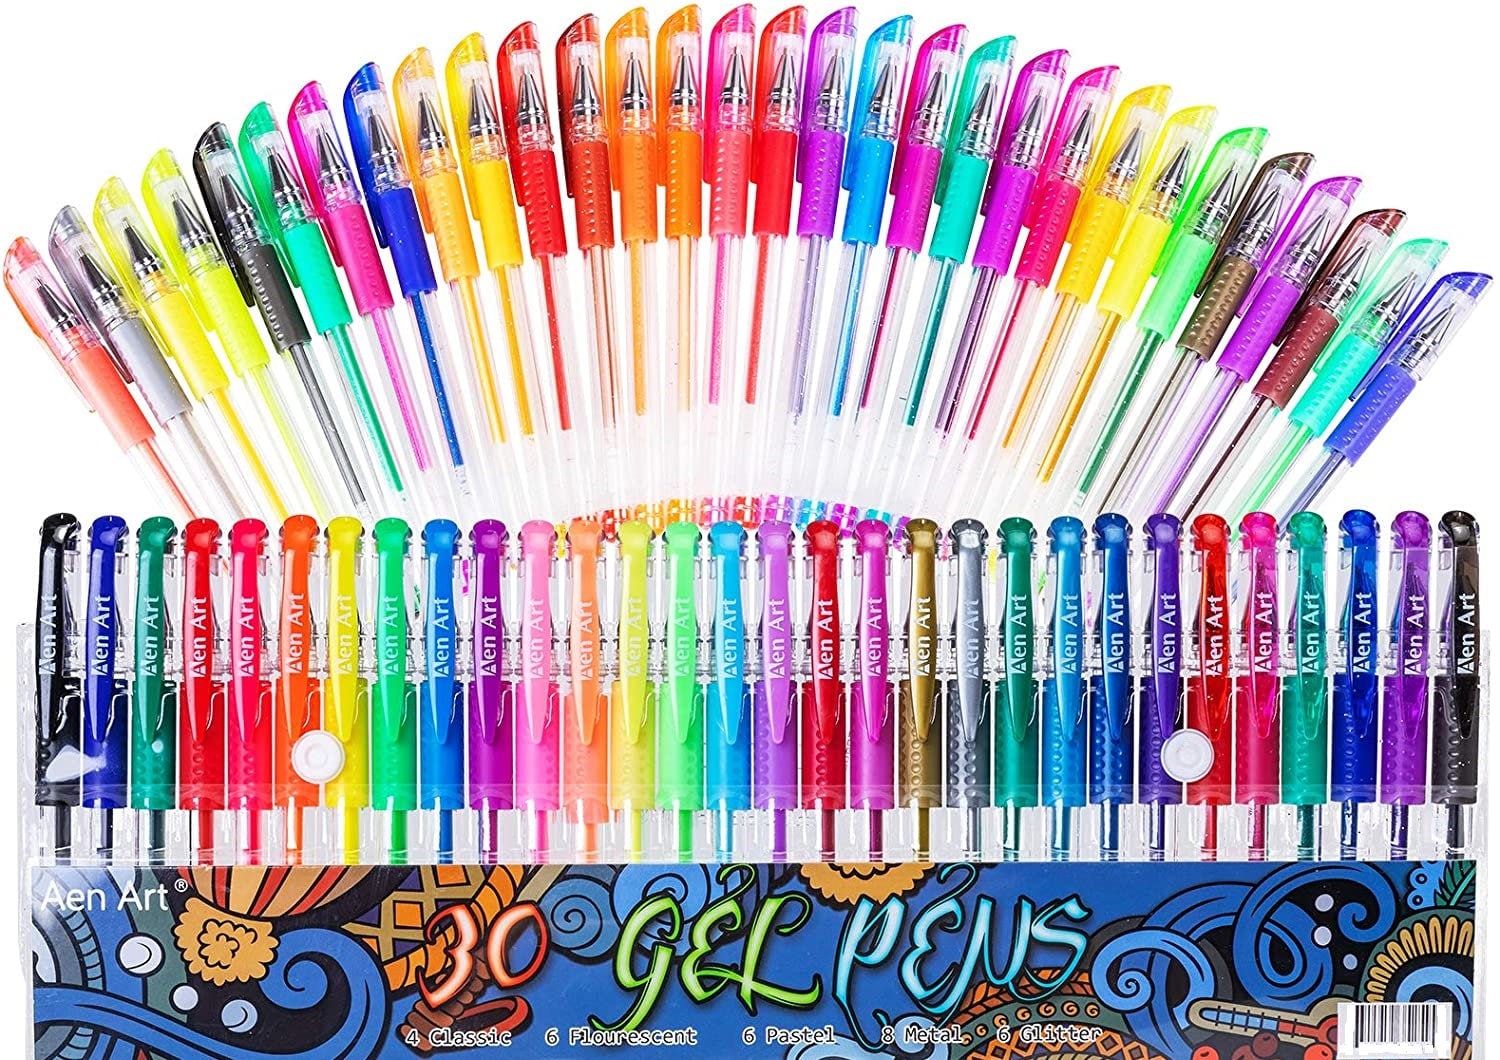 Coloring Pens - Gel Pens Set - Pen Sets for Girls - Spirograph Pens